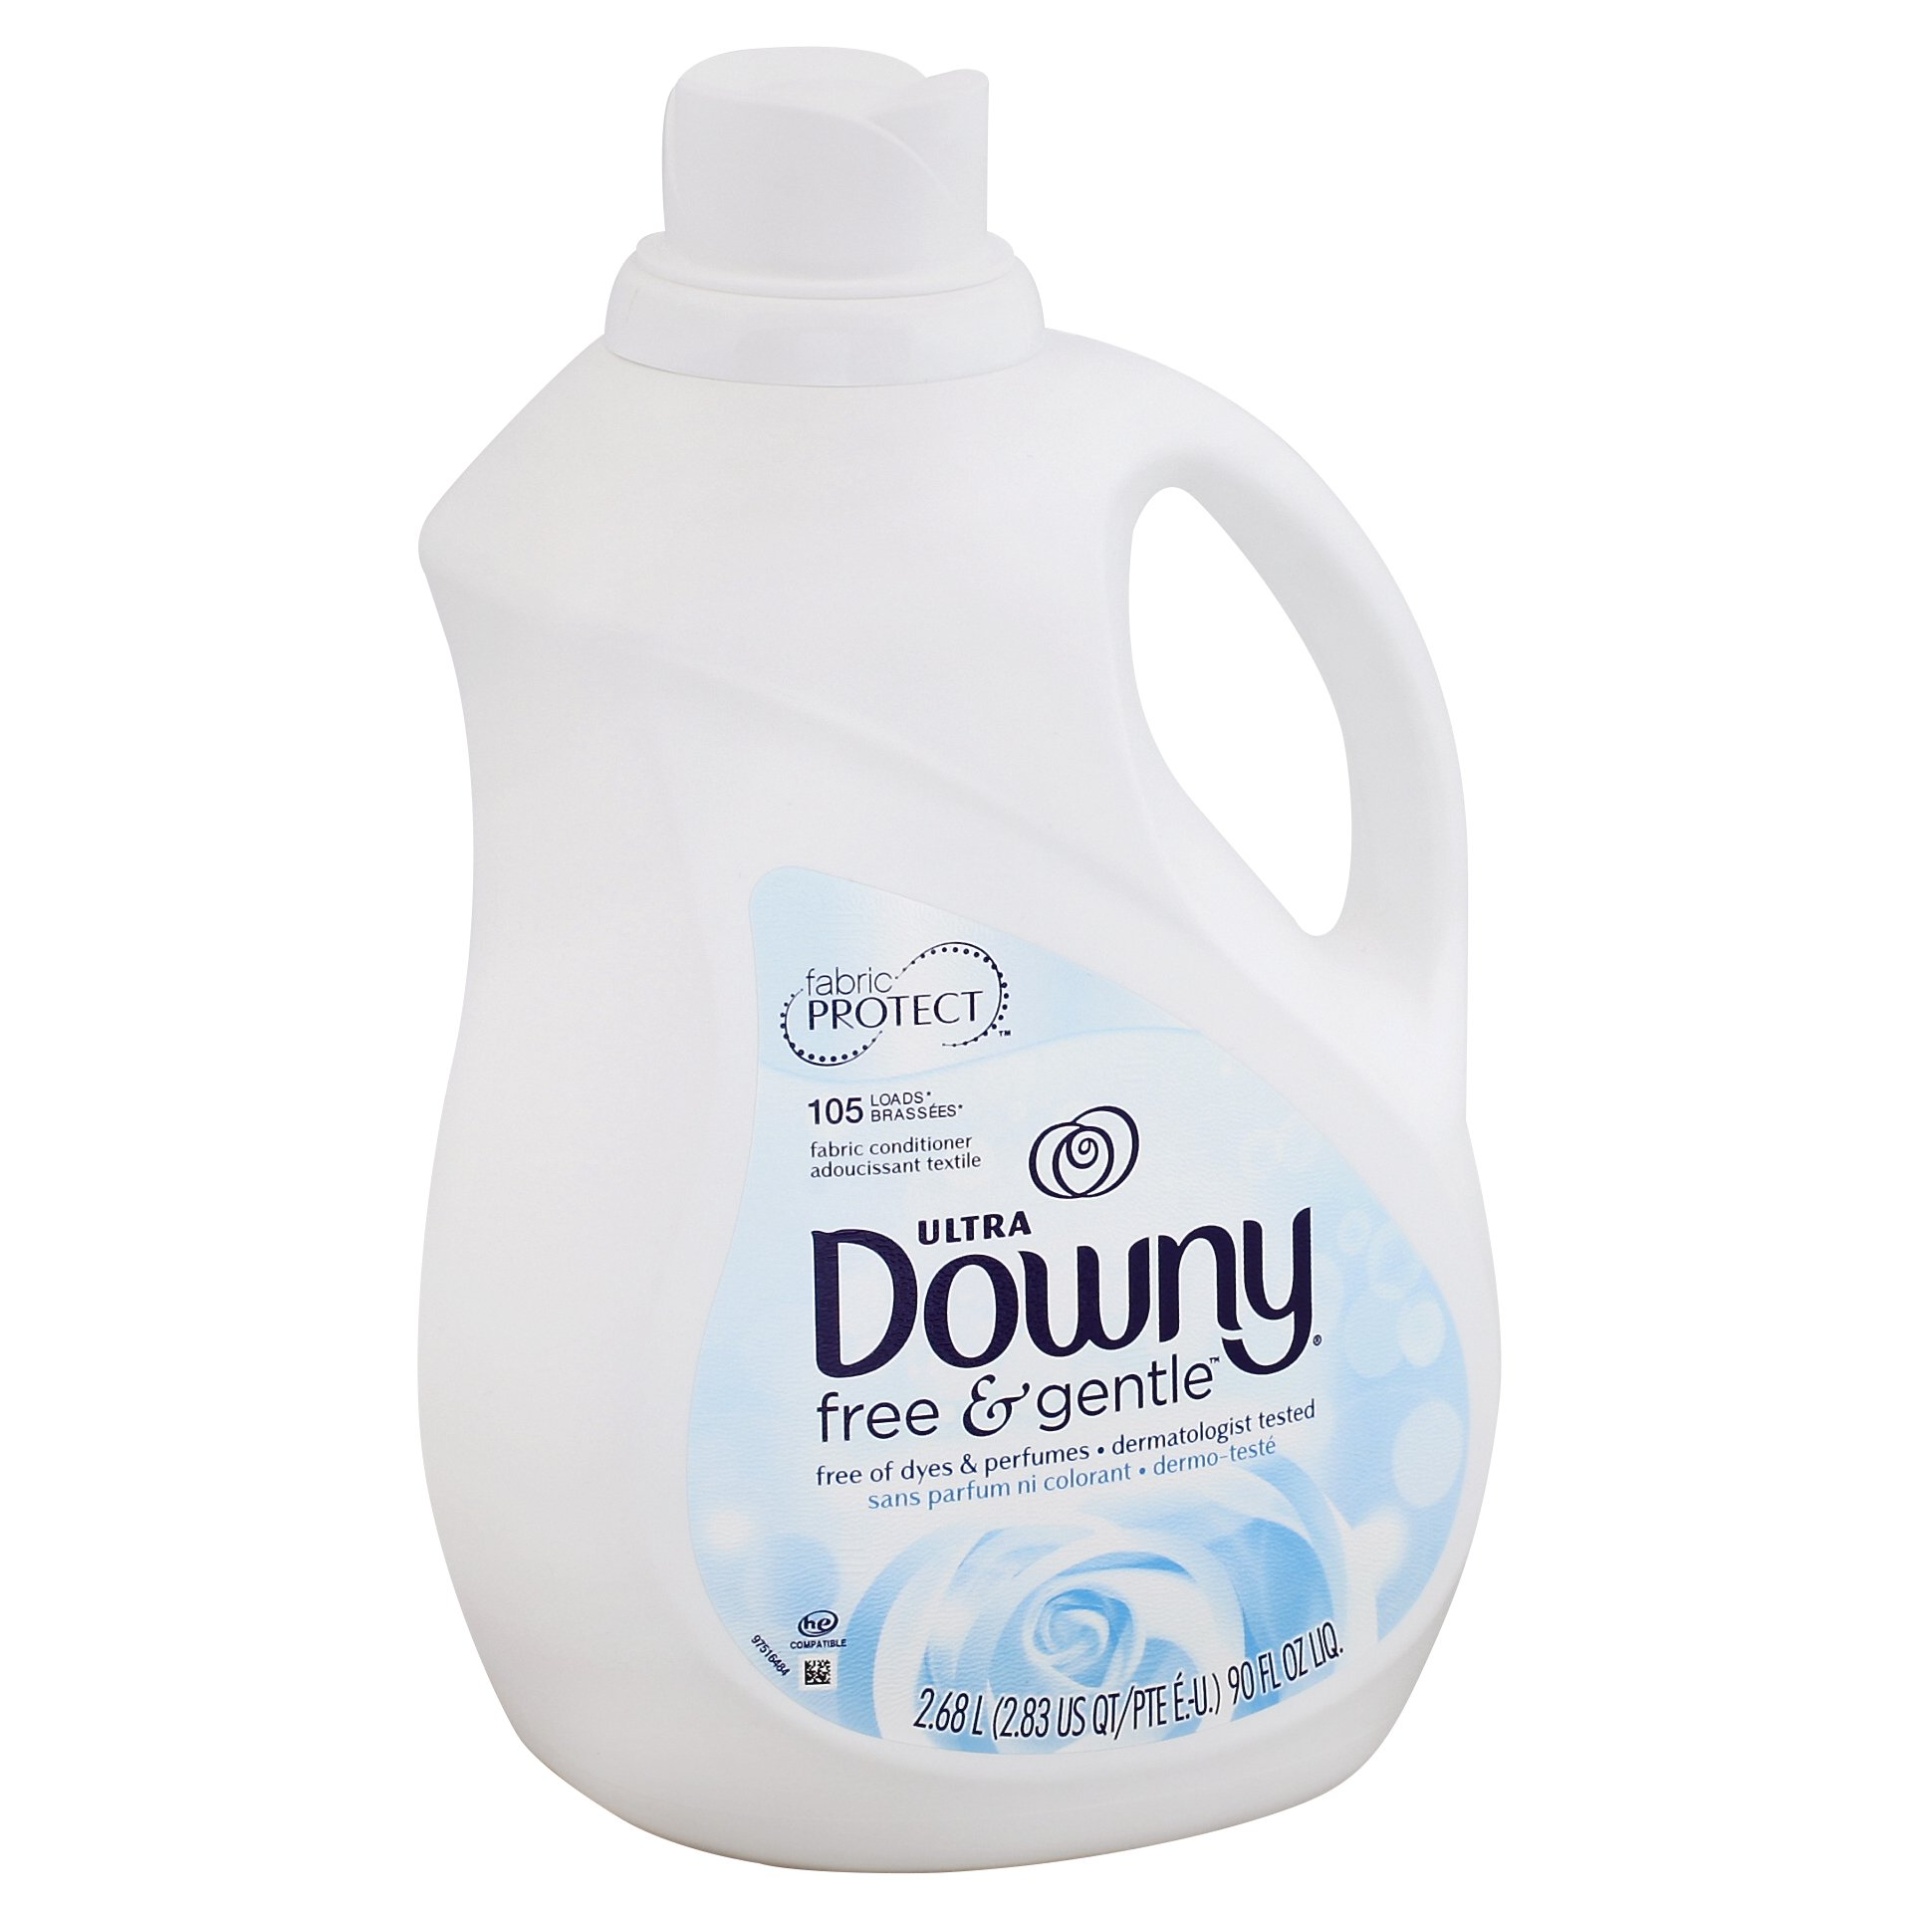 downy laundry detergent